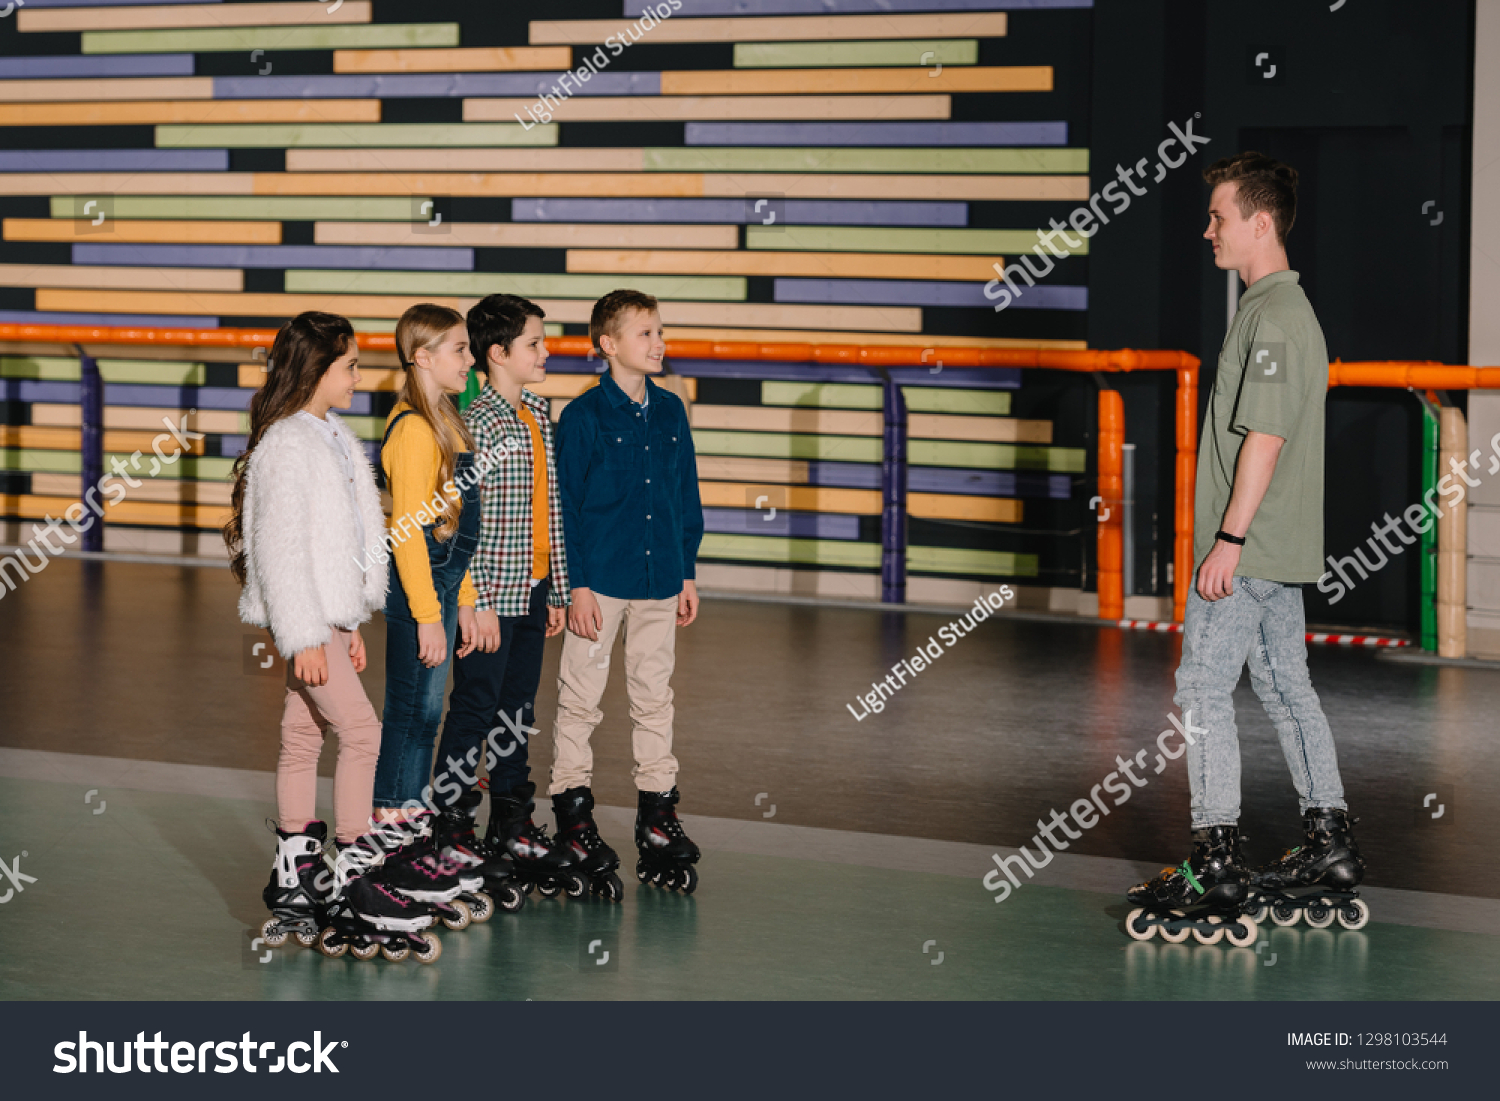 children's roller skate trainers